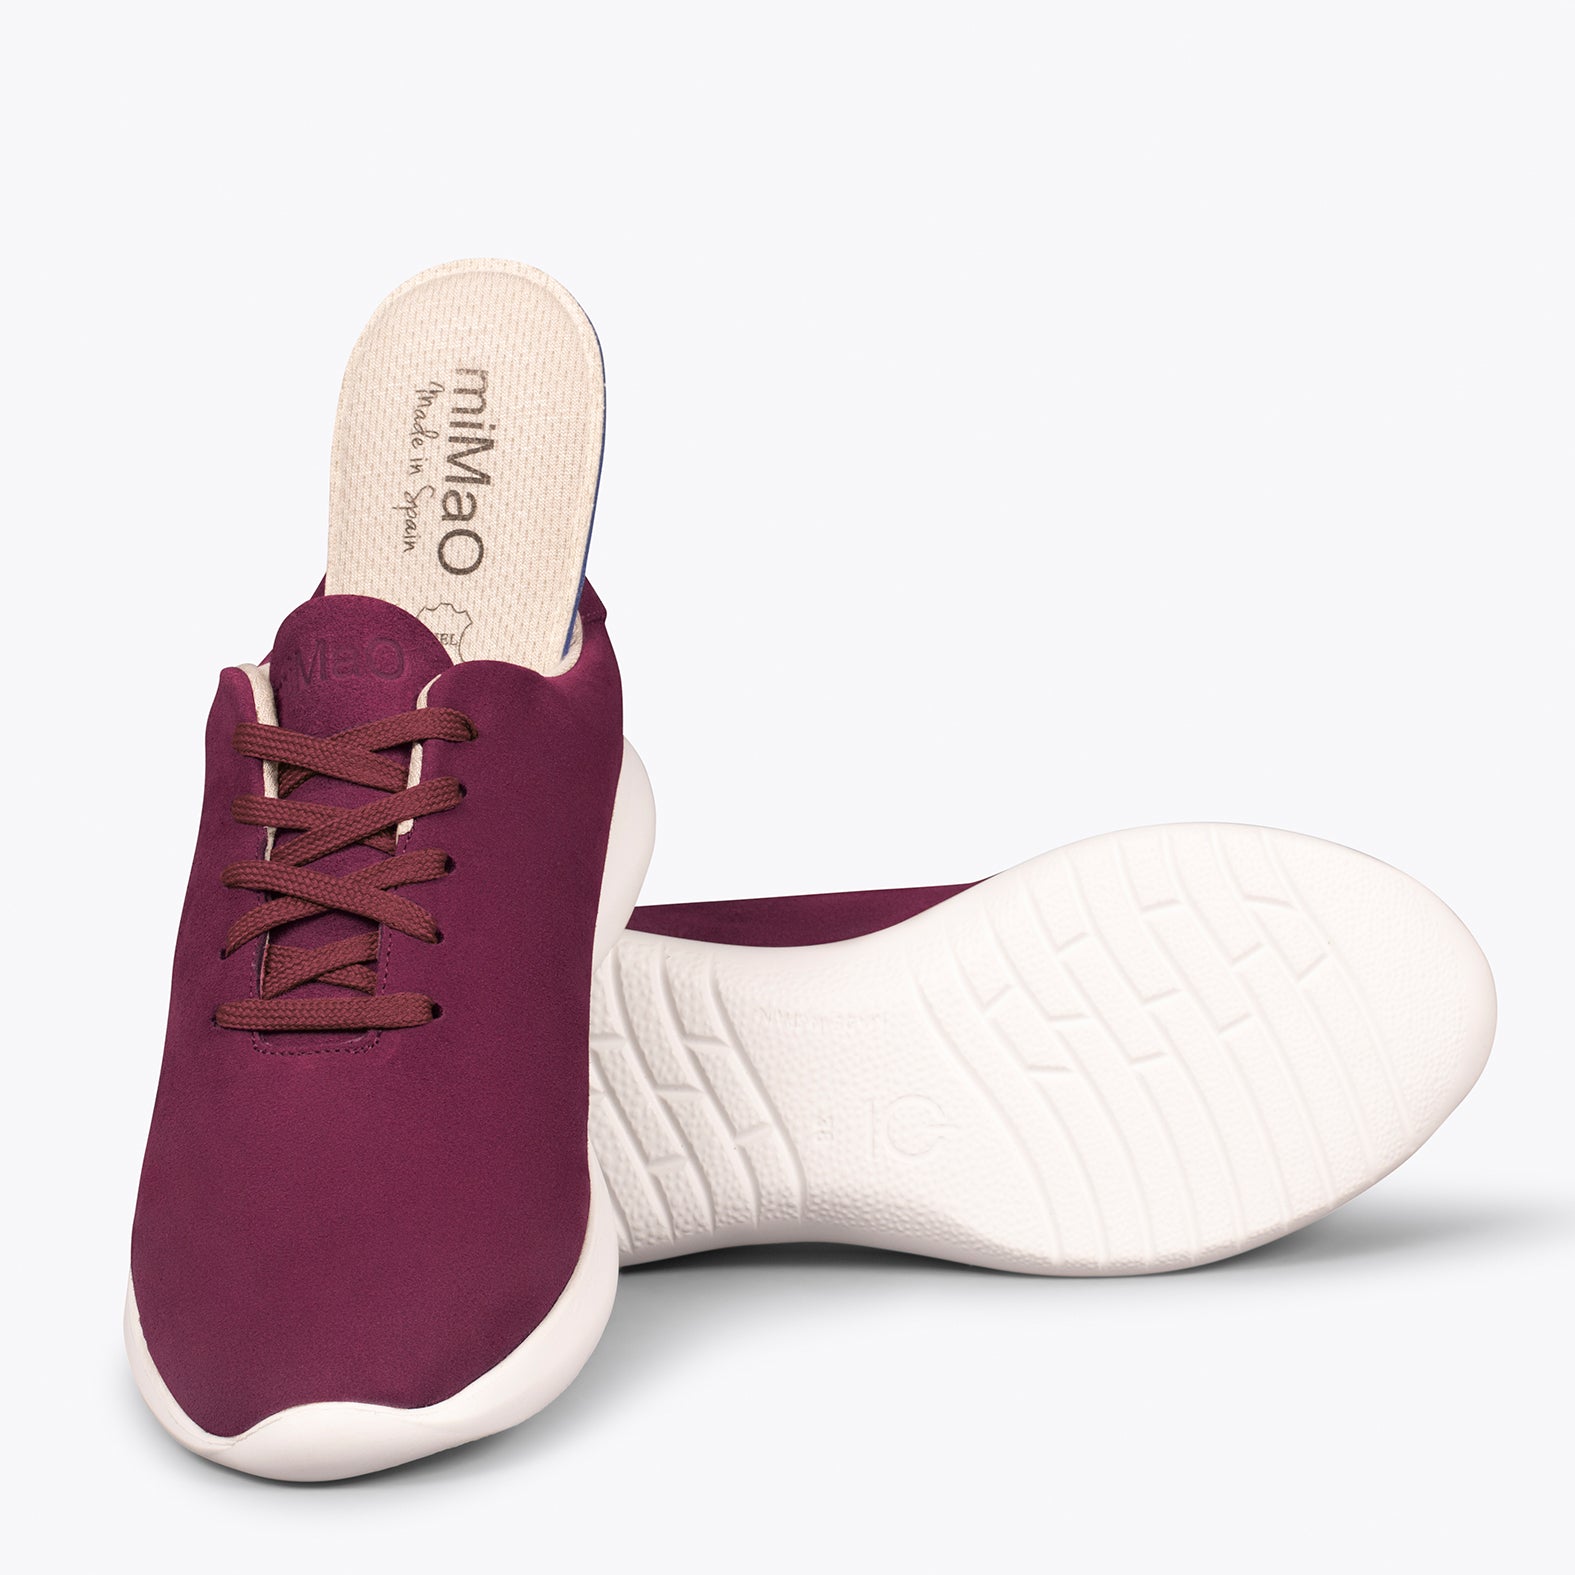 WALK – BURGUNDY comfortable women’s sneakers